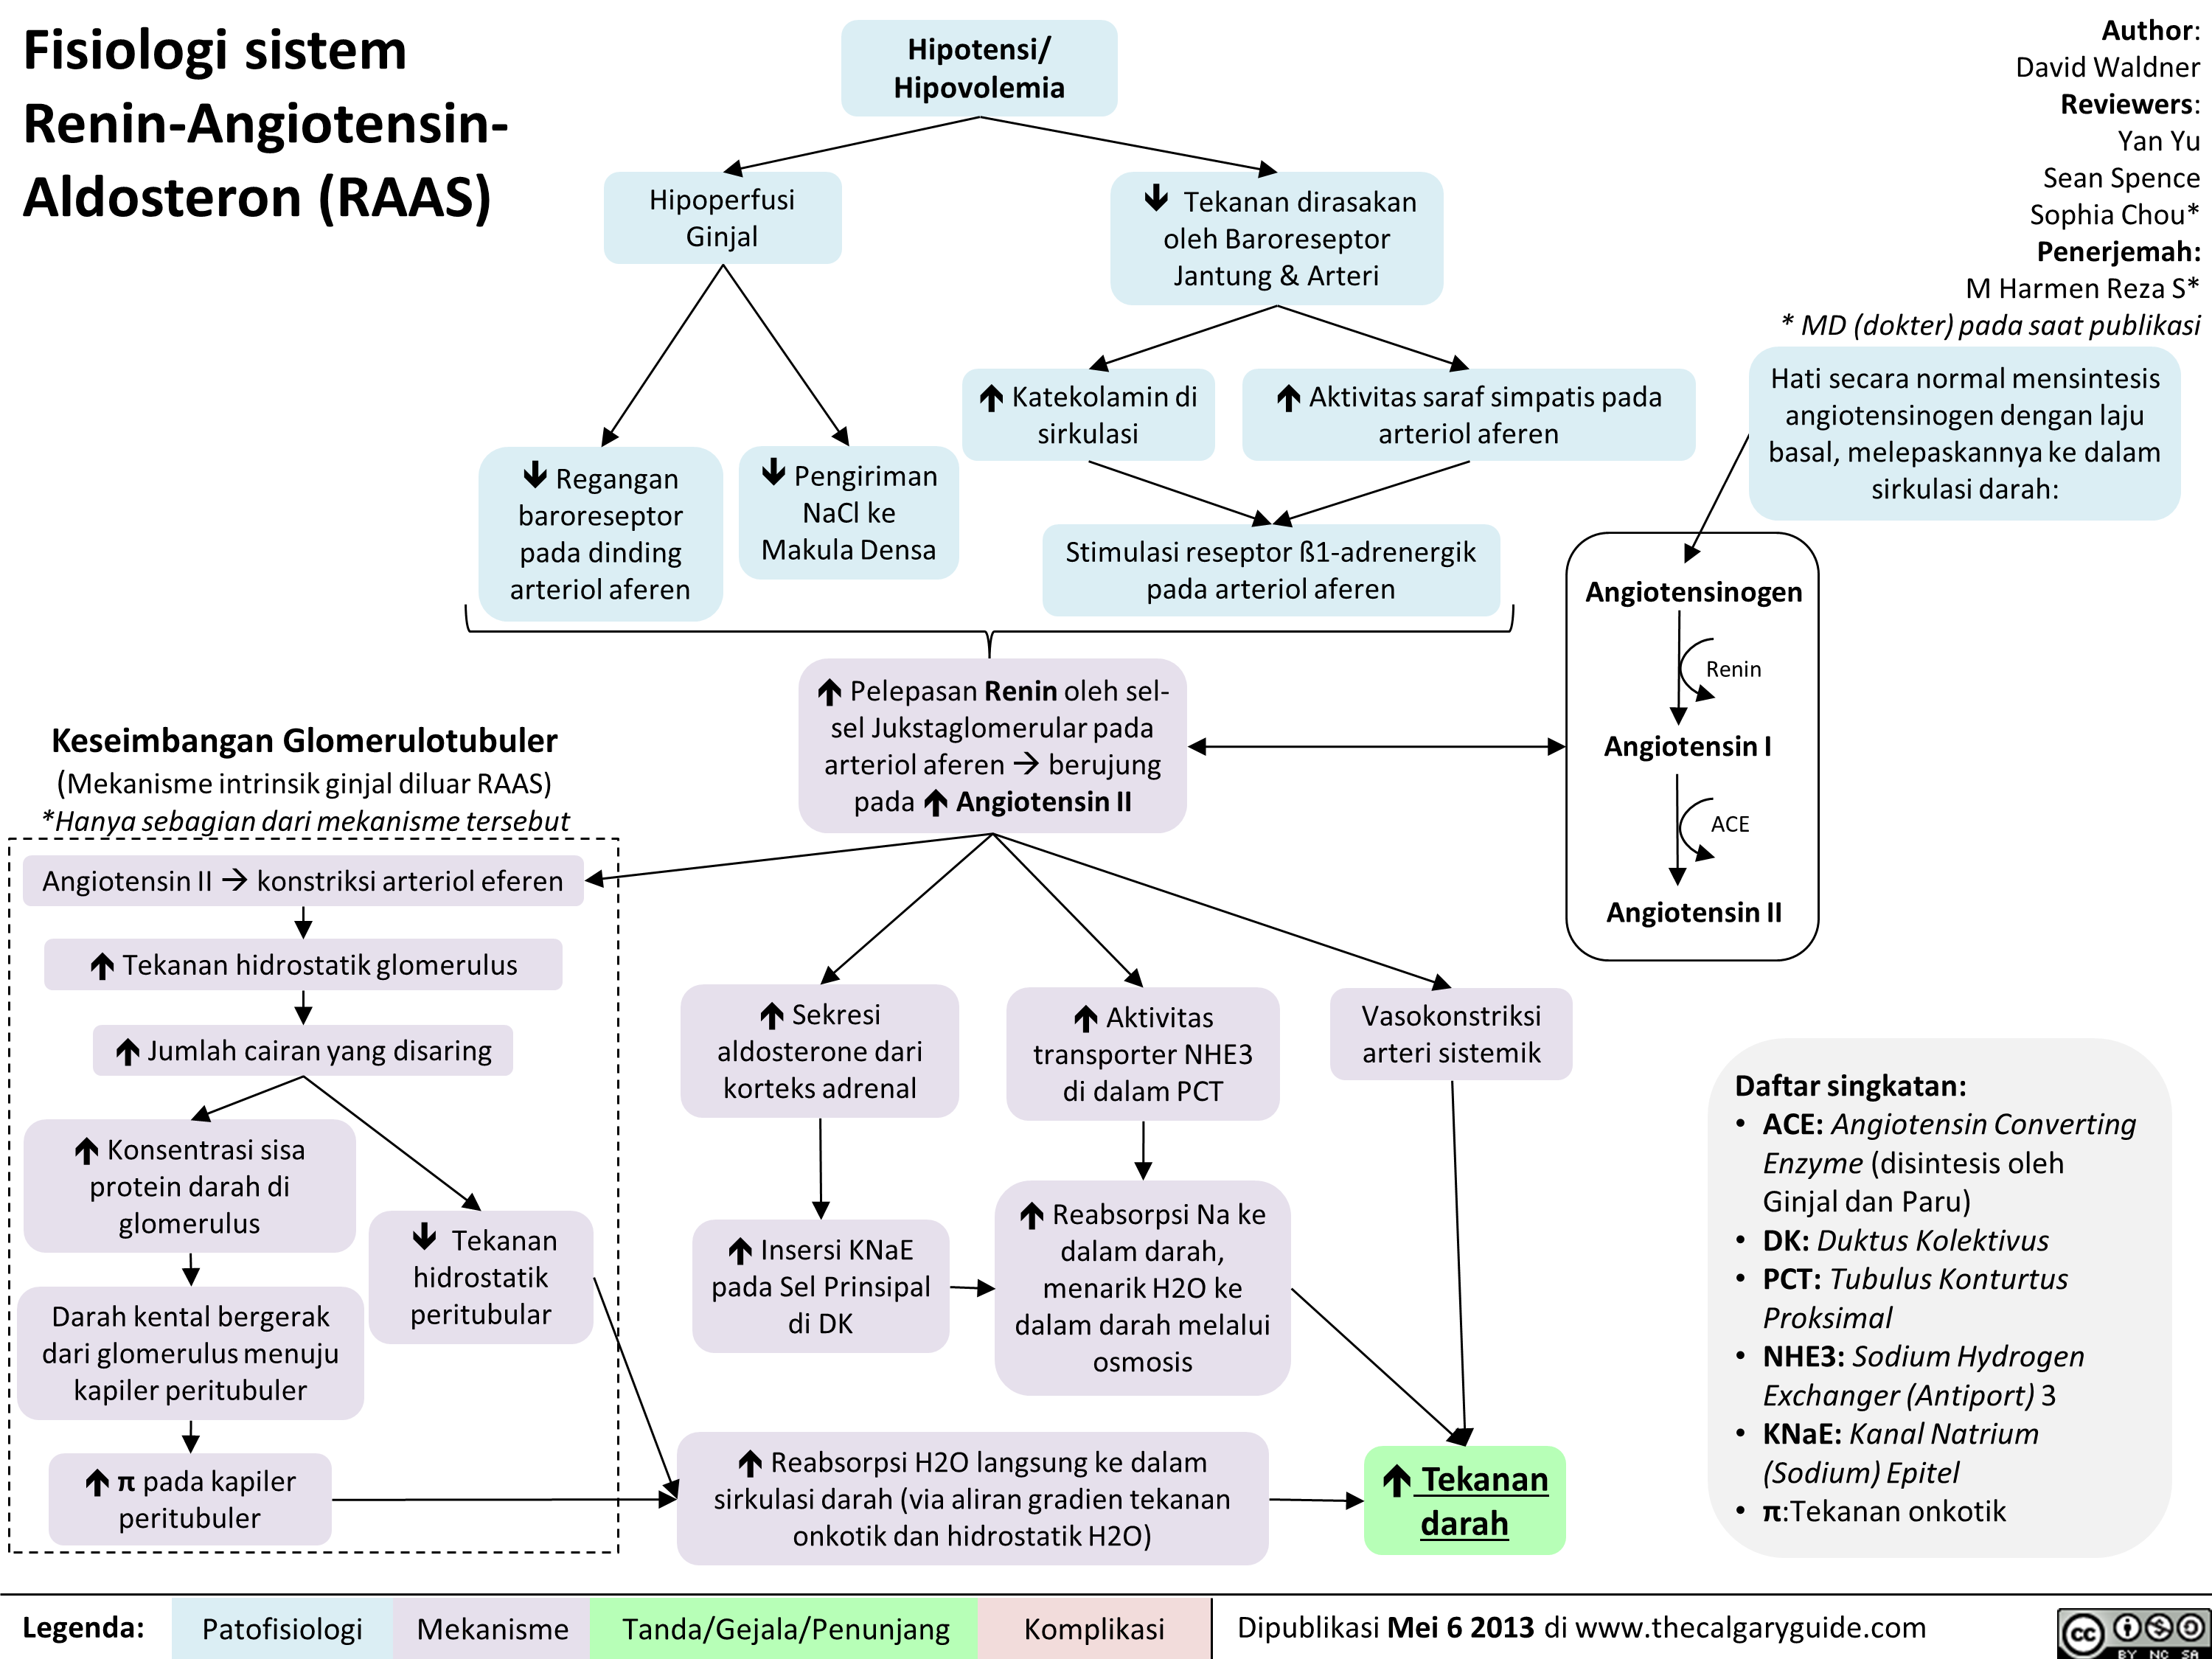 Fisiologi sistem Renin-Angiotensin-Aldosteron (RAAS) | Calgary Guide